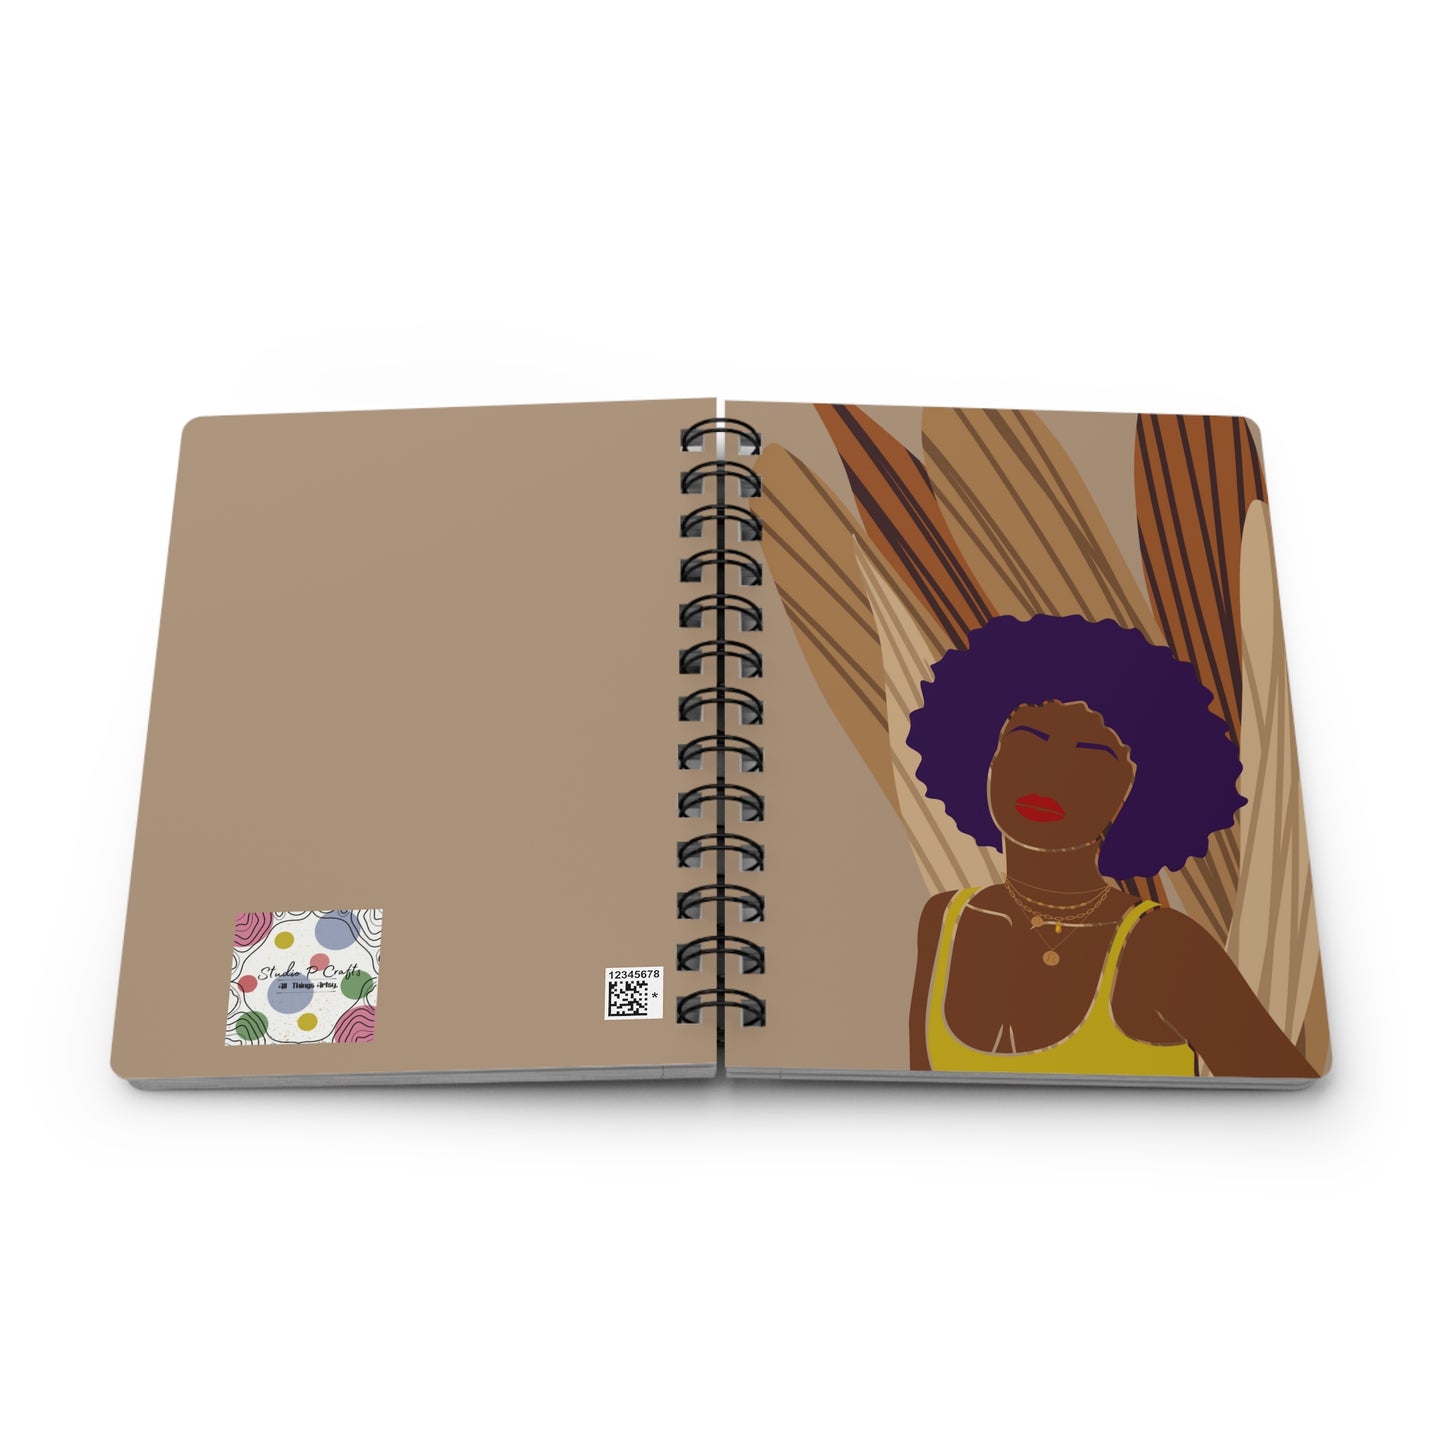 Classy Woman Notebook, Black Woman Notebook, Black Girl Magic Notebook, Black Magic Notebook, Woman Inspired Notebook, Brown Color Notebook, Flower Pattern Notebook, Spiral Bound Journal